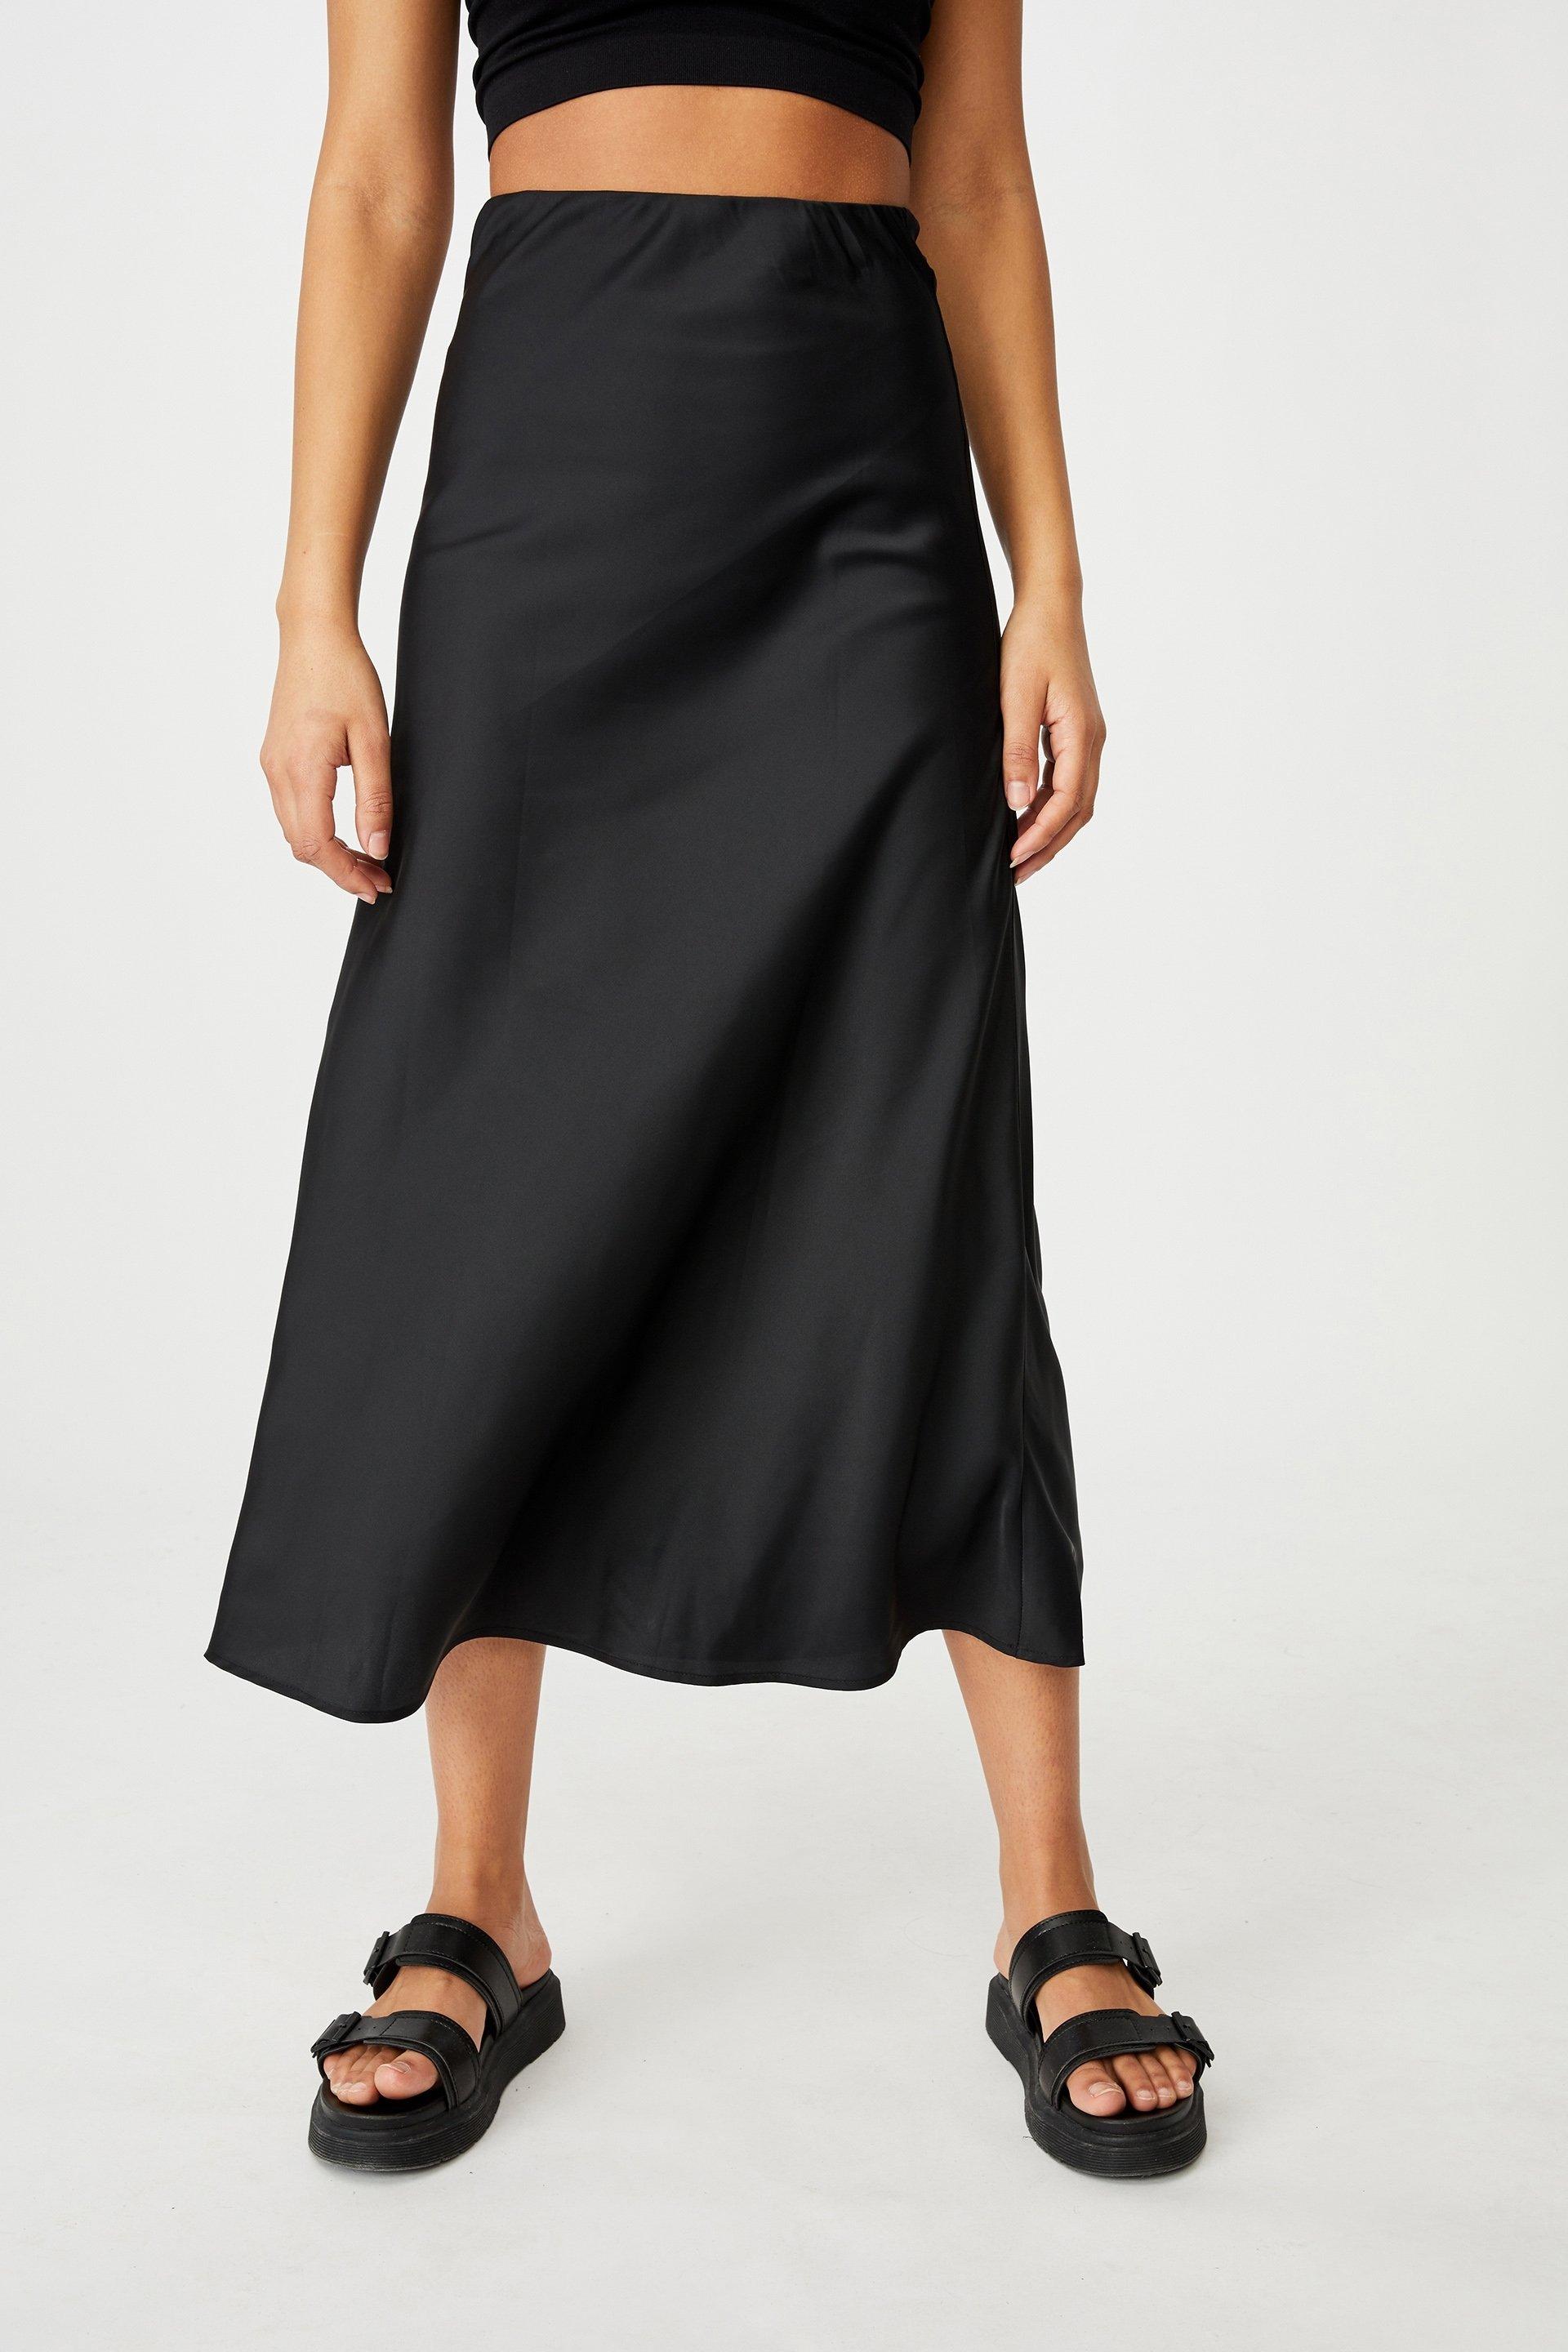 All day slip skirt - black Cotton On Skirts | Superbalist.com